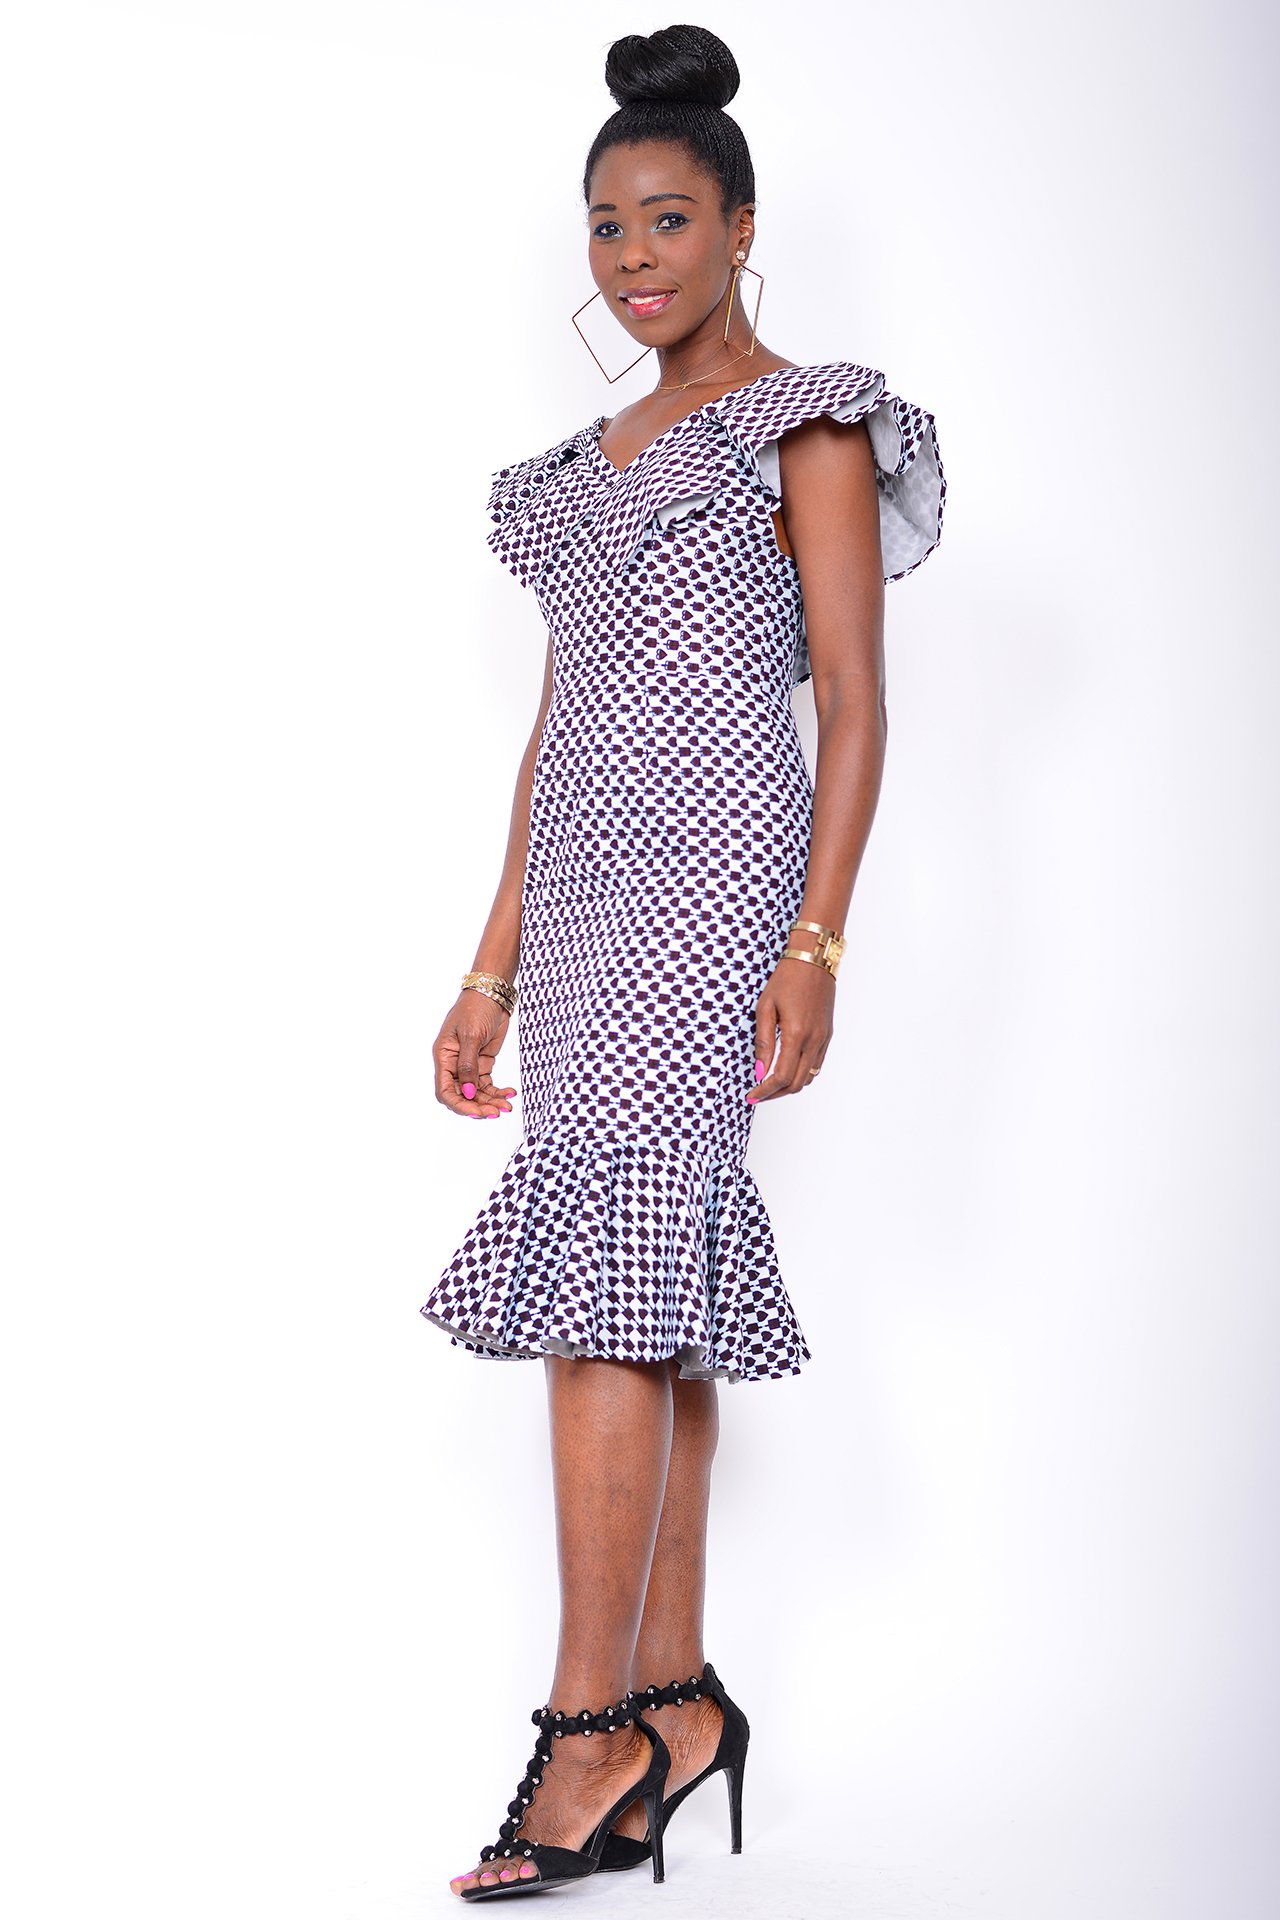 Afrikanische Mode - Euge-W Kollektion 2020/2021 - Lilly Rose & Leilani